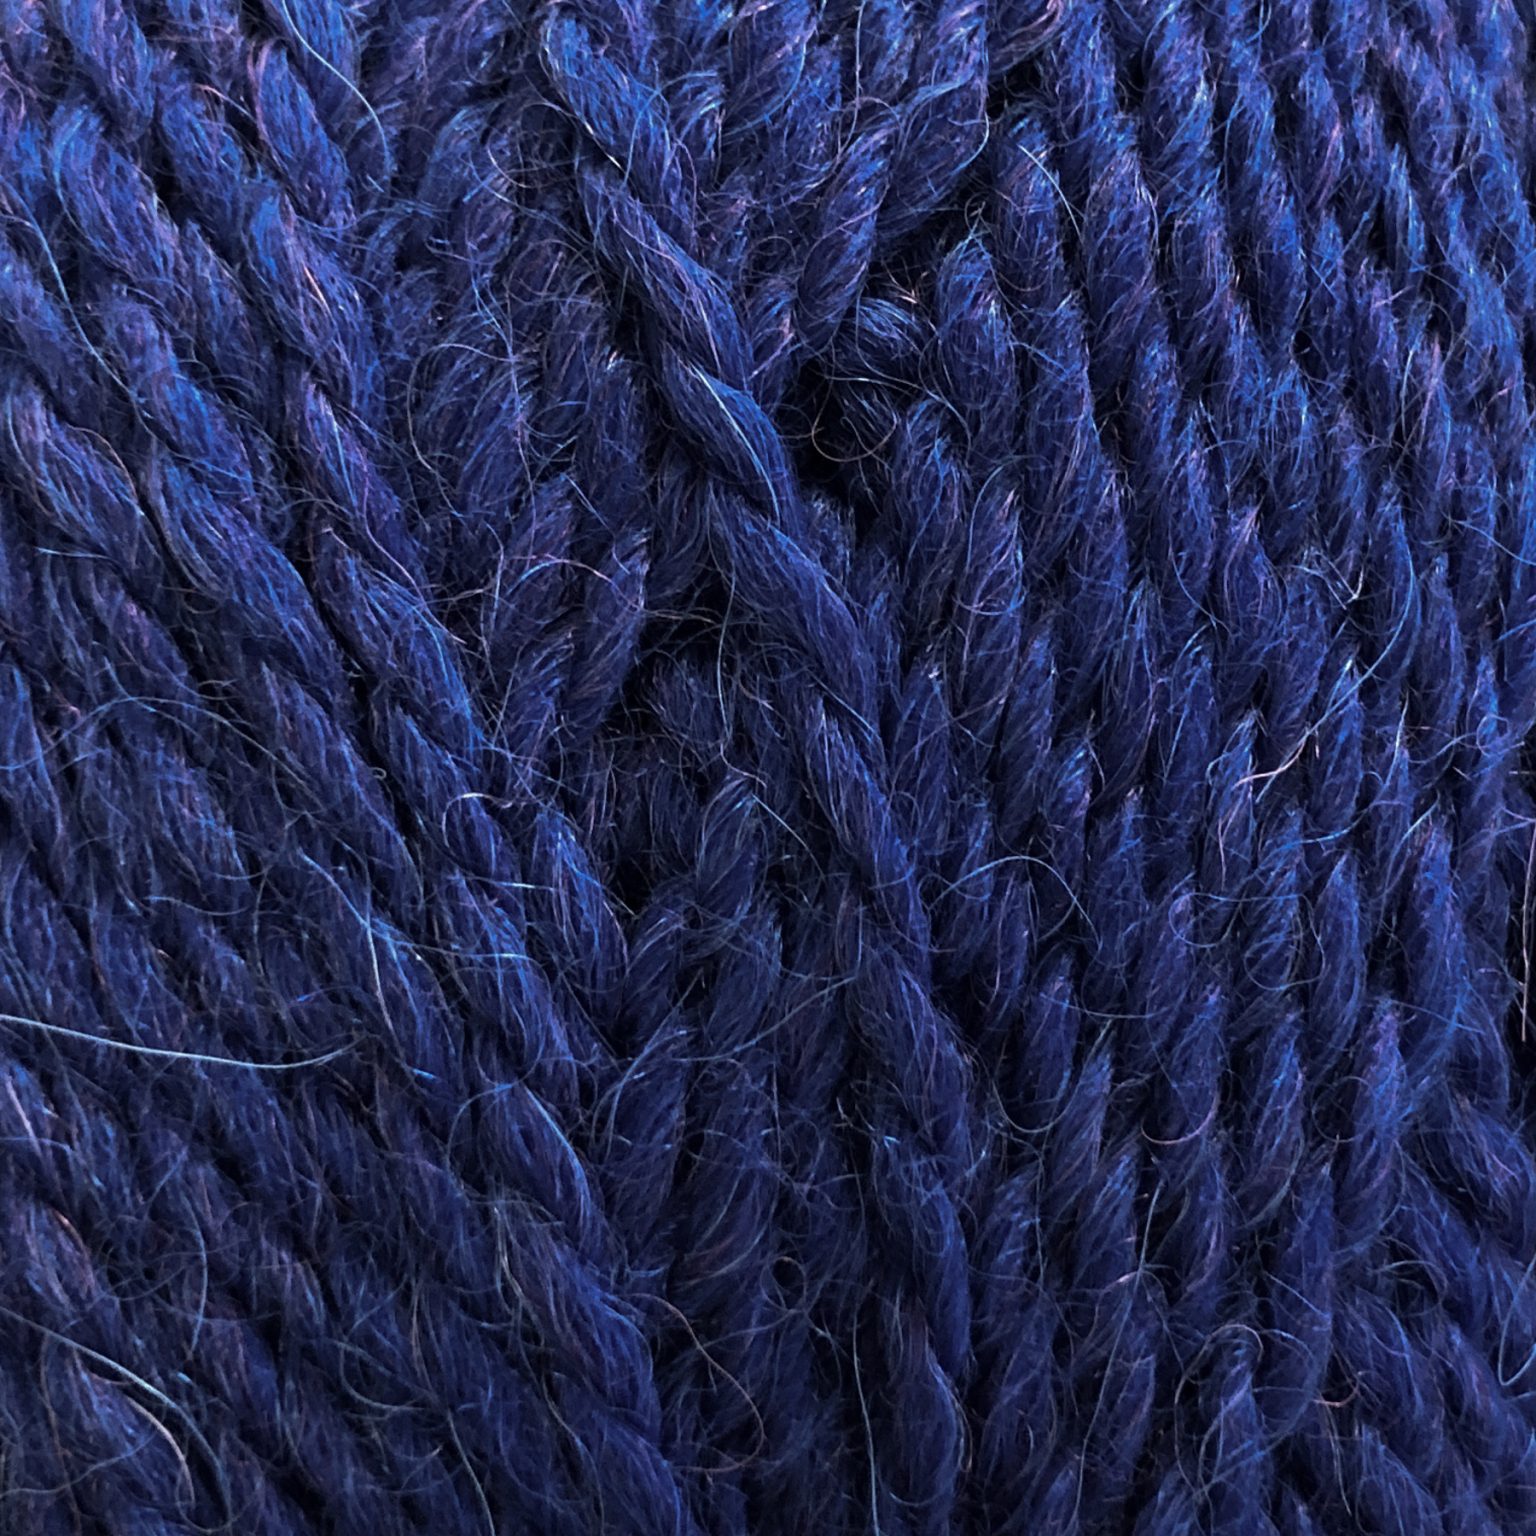 FIBRESPACE NZ Inca Spun Worsted | 10ply Alpaca, Fine Wool Blend buy kiwi yarn Blue Melange 2684